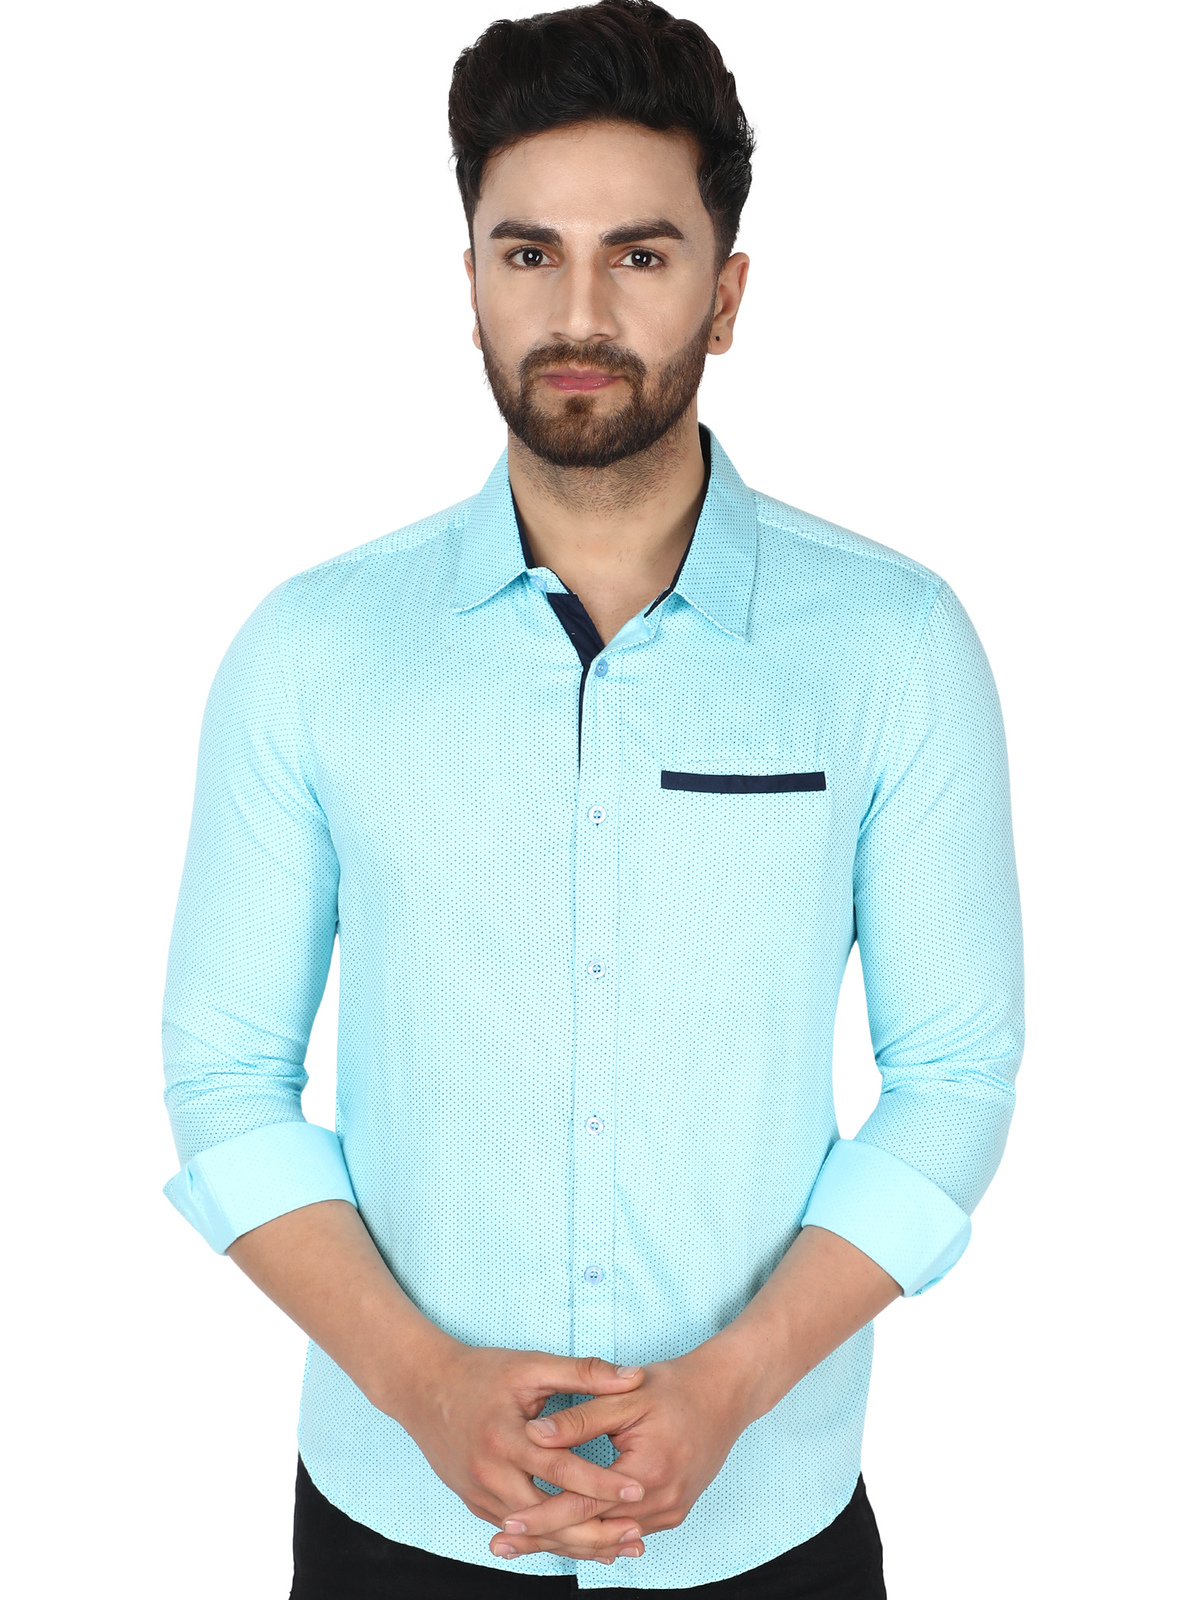 SKAVIJ Mens Polka Dot Shirt Classic Slim Fit Contrast Dress Shirts Turquoise MS8